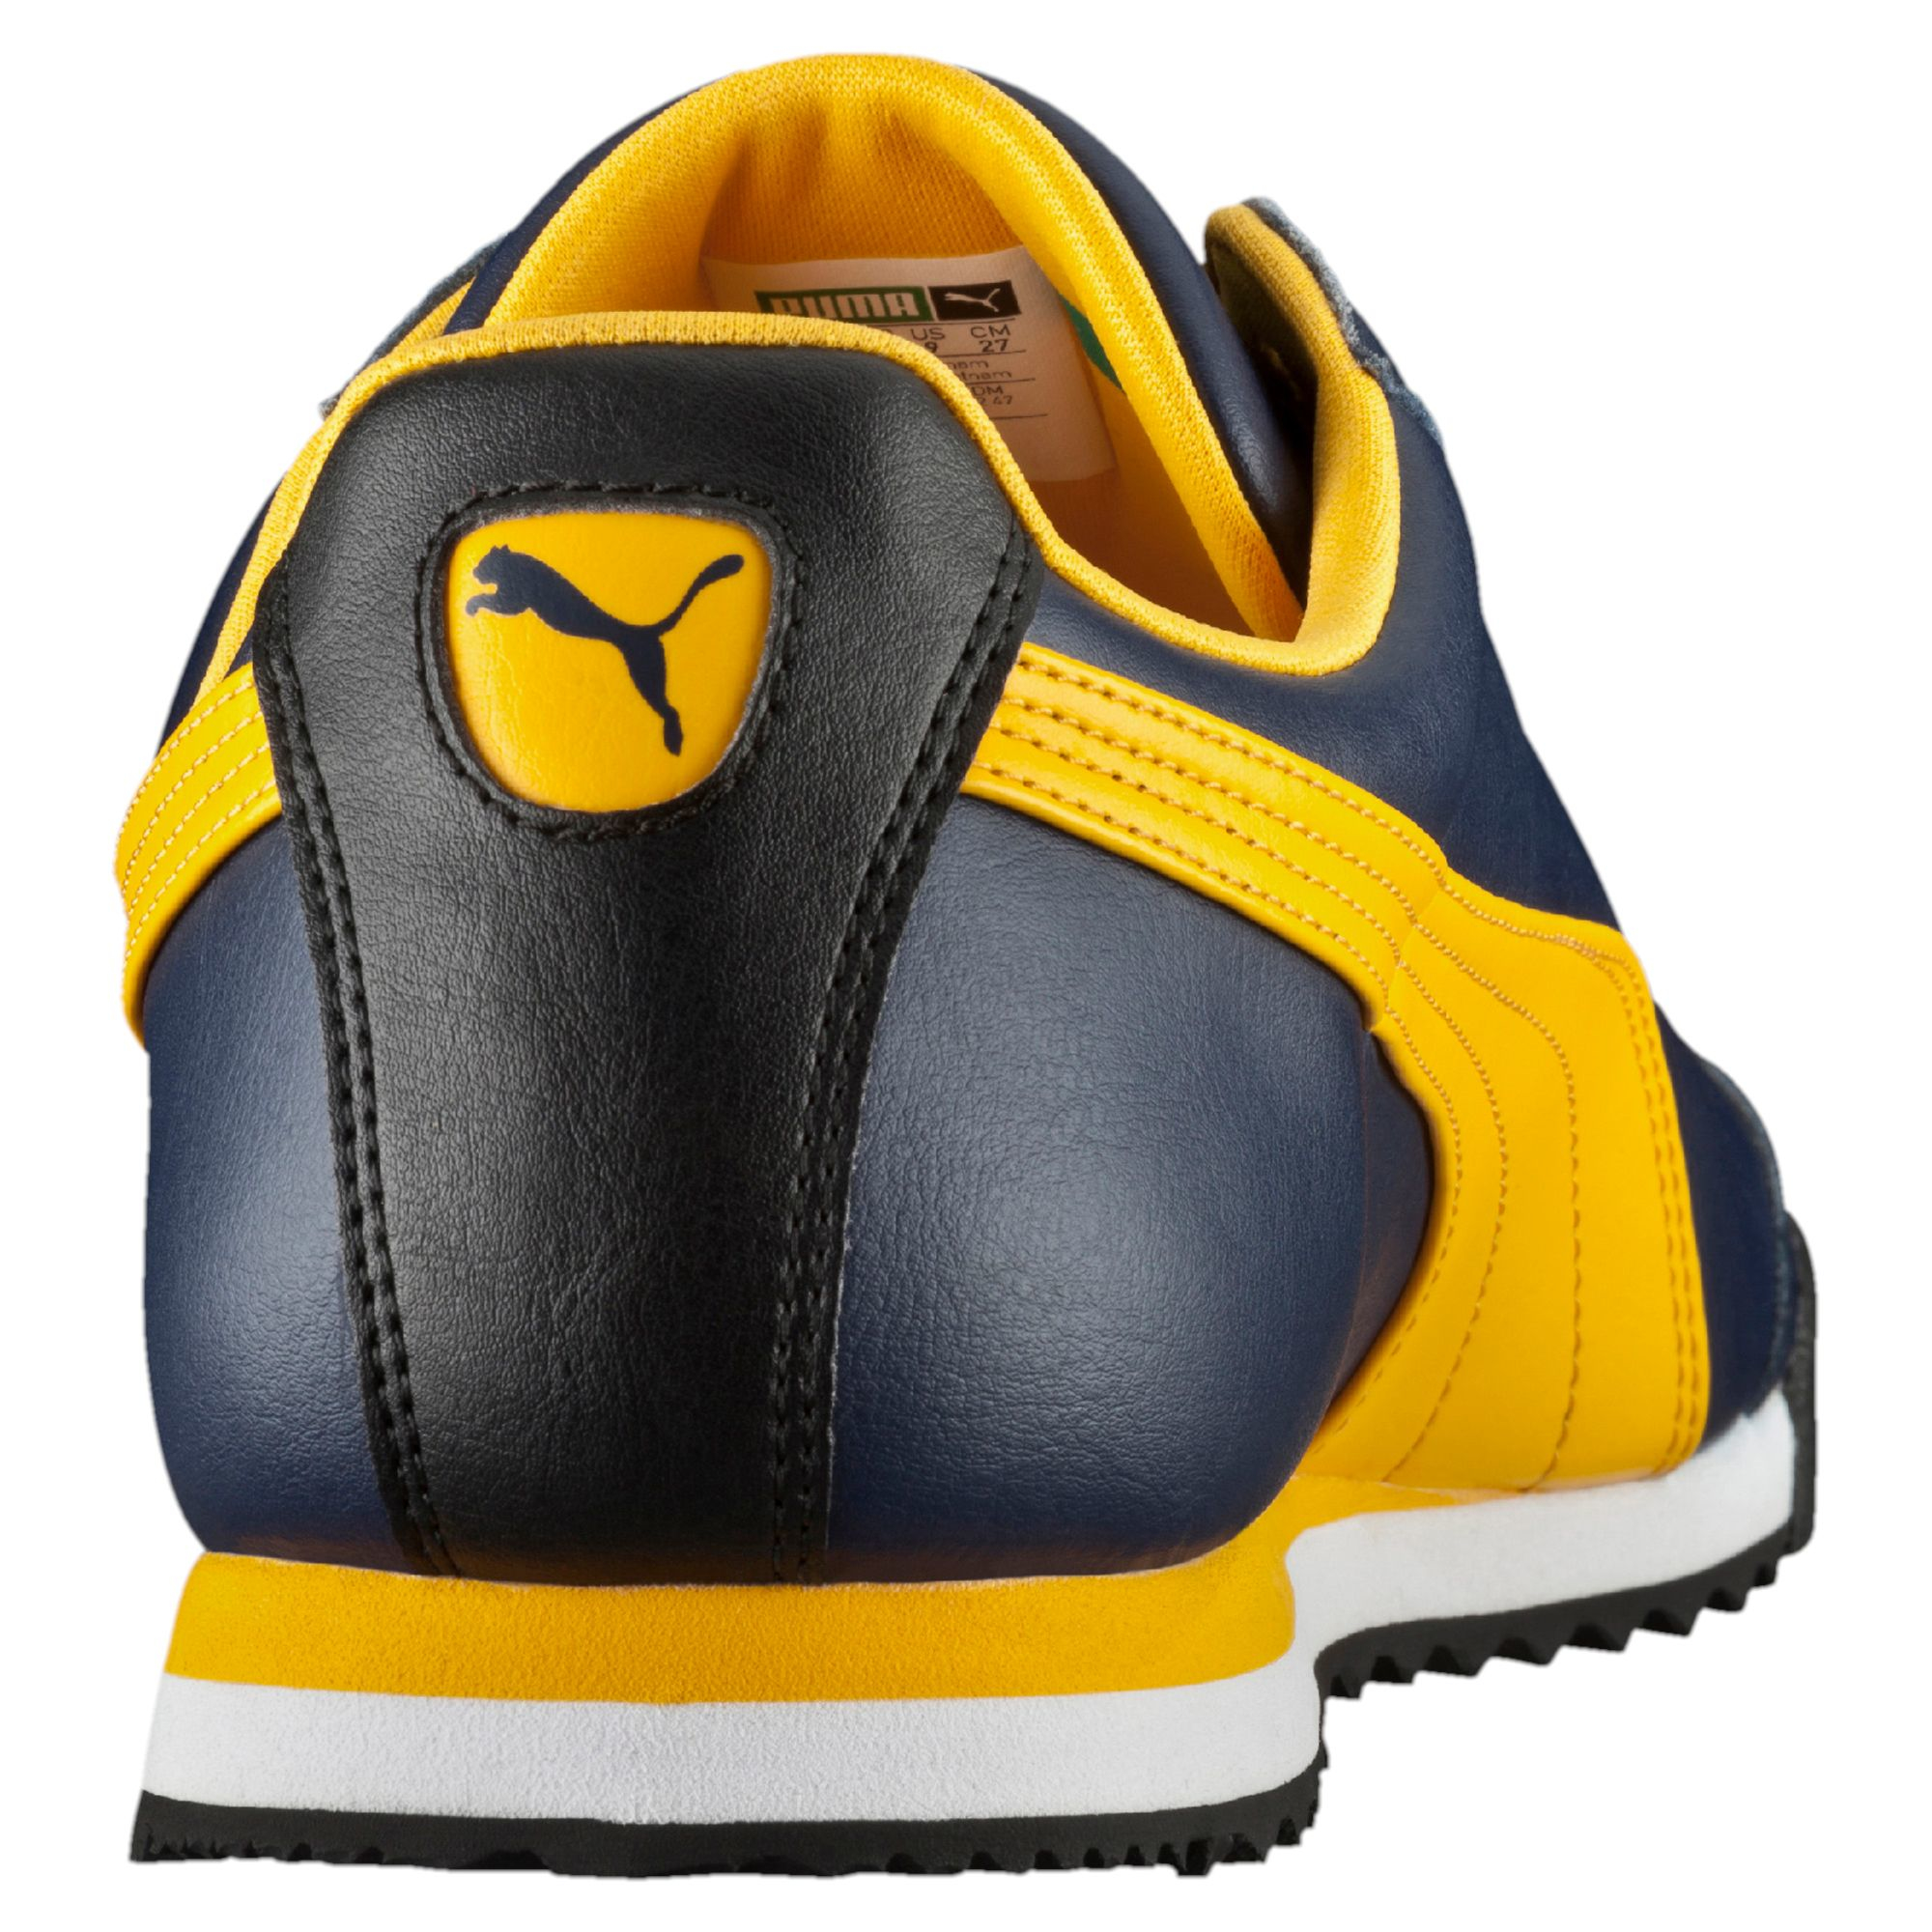 Lyst - Puma Roma Men's Sneakers in Yellow for Men